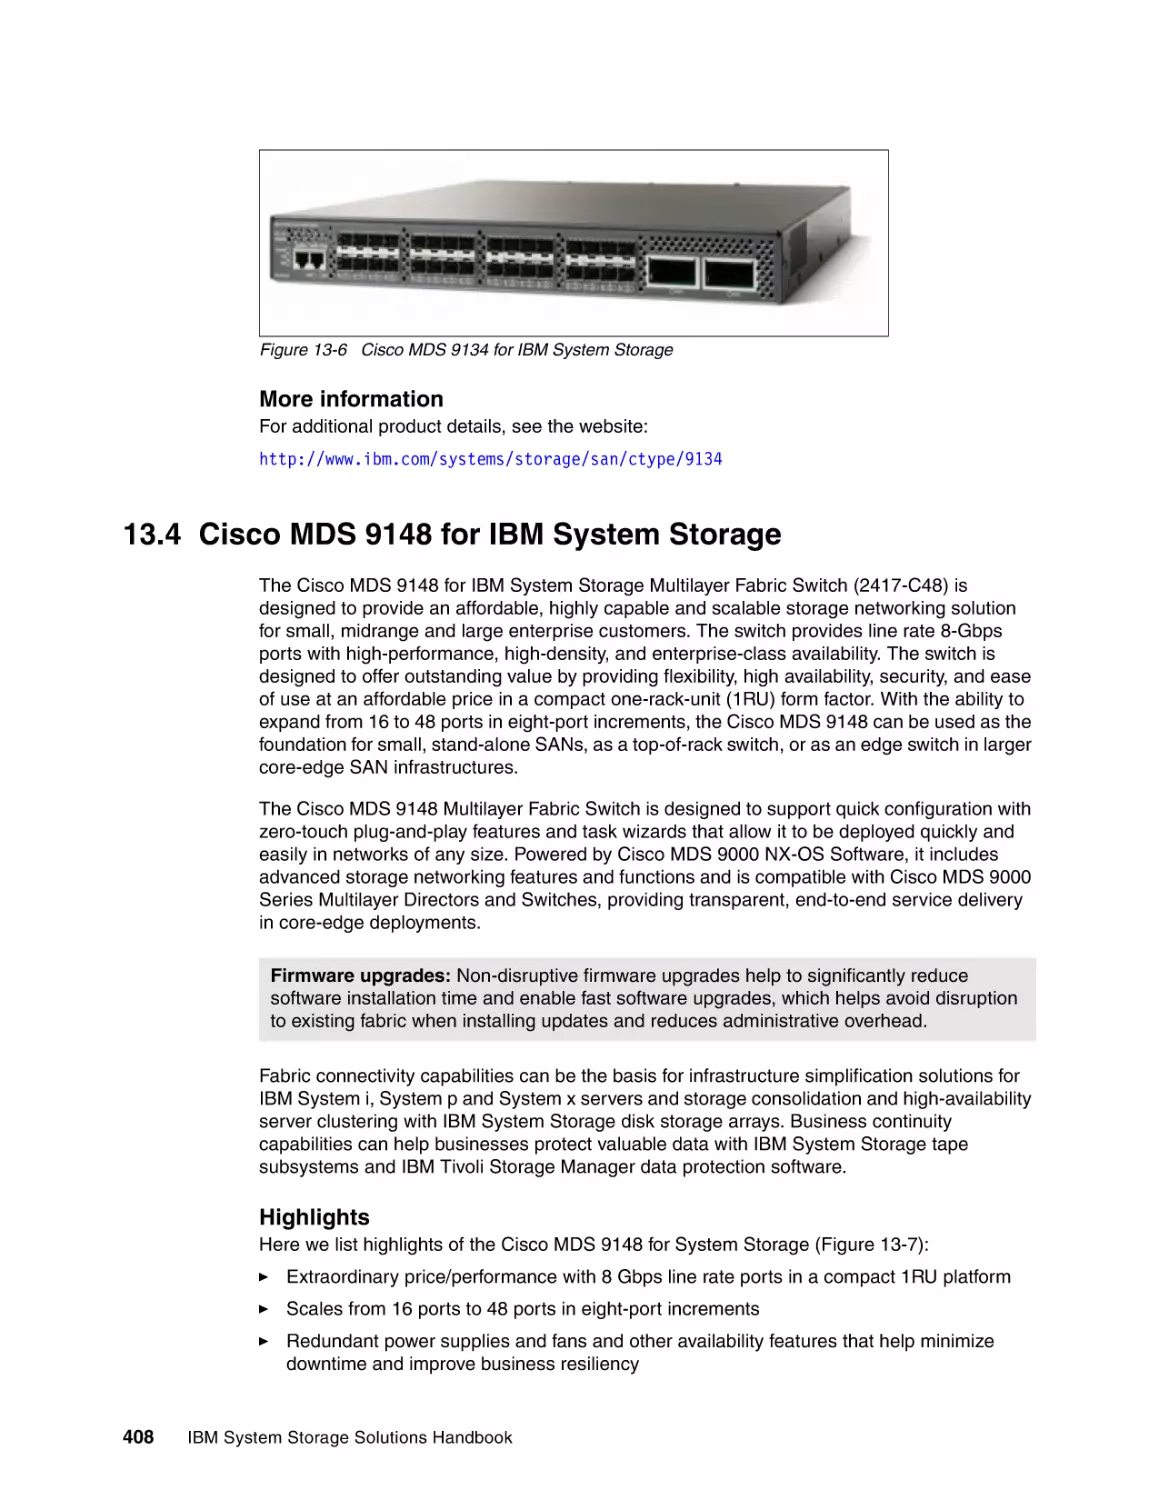 13.4 Cisco MDS 9148 for IBM System Storage